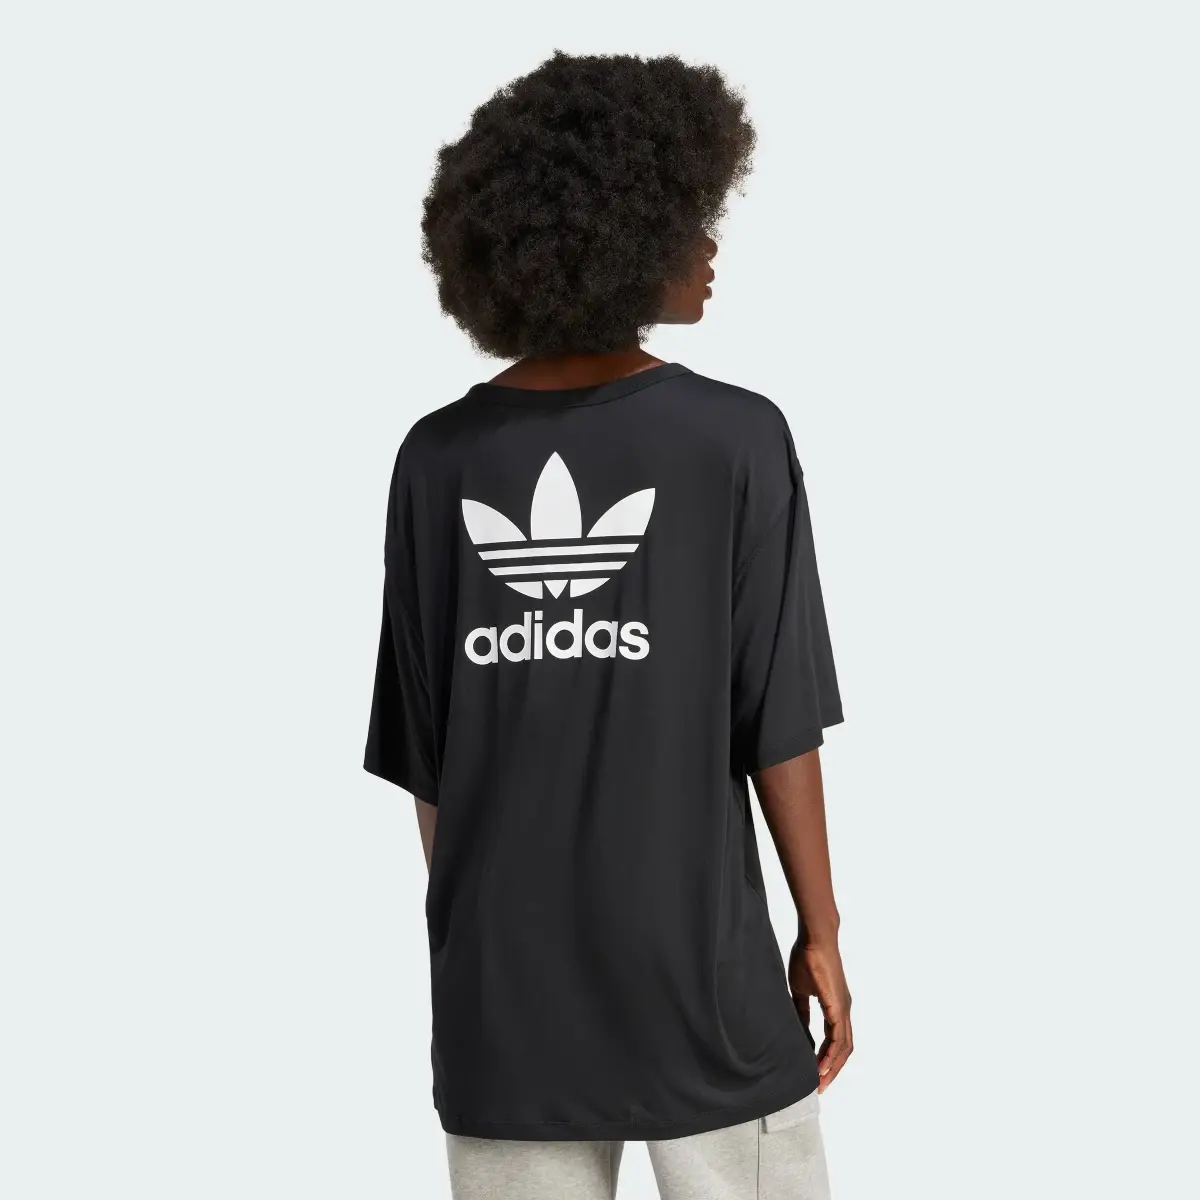 Adidas Trefoil T-Shirt. 3